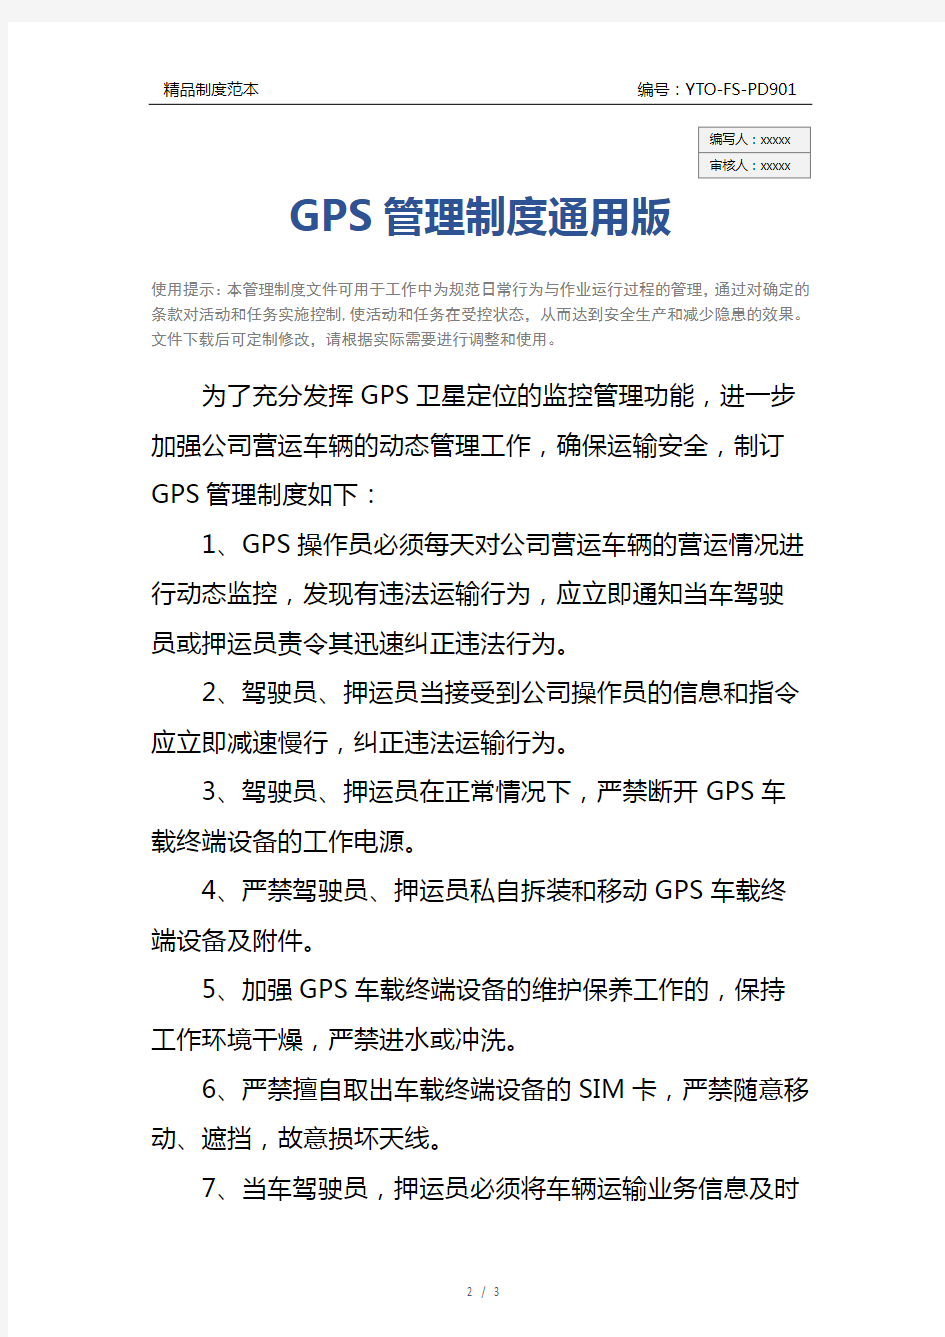 GPS管理制度通用版